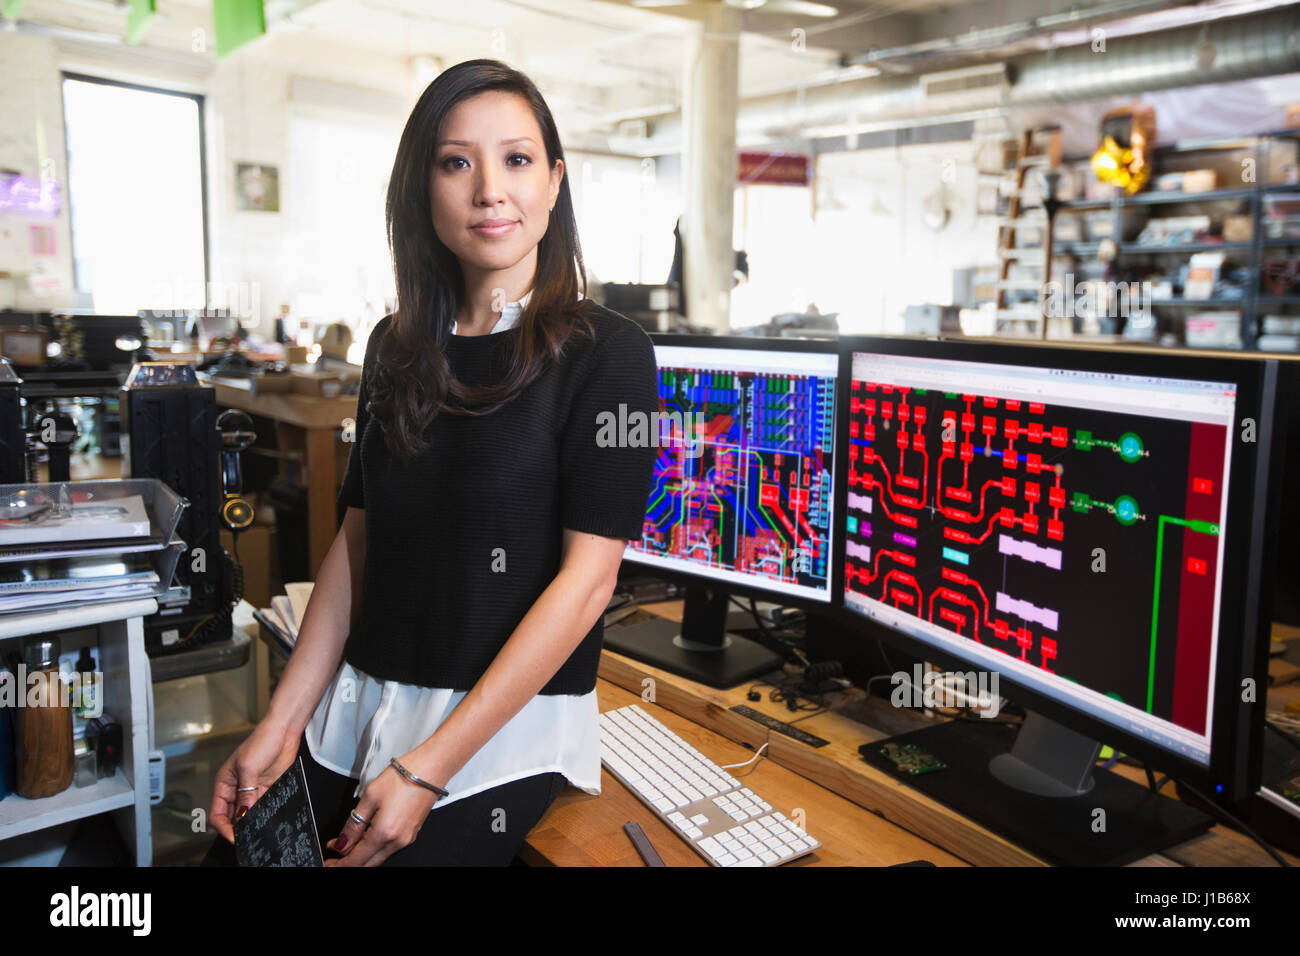 Mixed Race woman posing near circuits on computer monitors Stock Photo